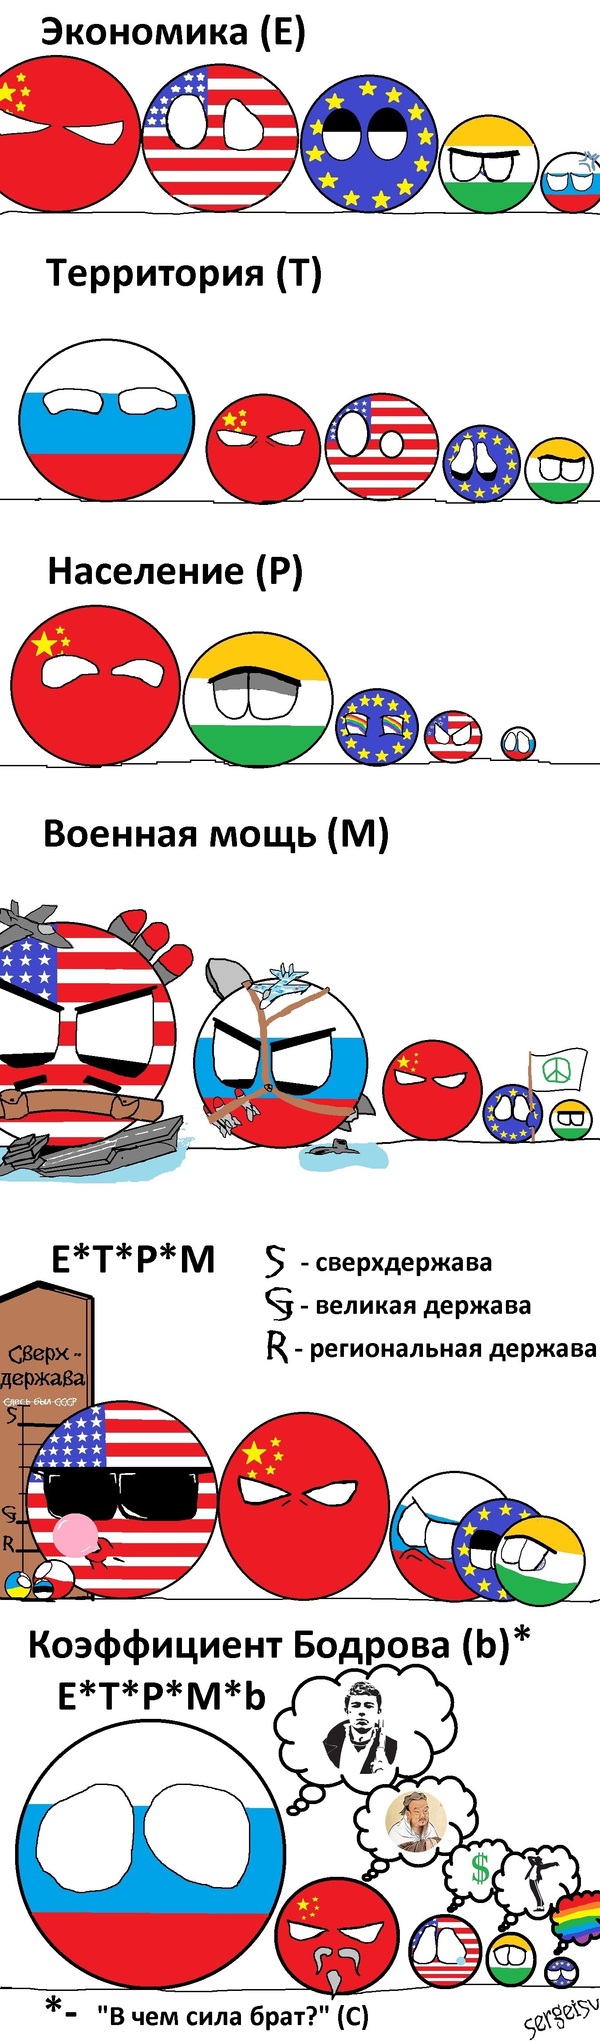 Geopolitics - USA, My, Countryballs, Russia, Sergey Bodrov, The United States and the European Union, Cold war, Politics, China